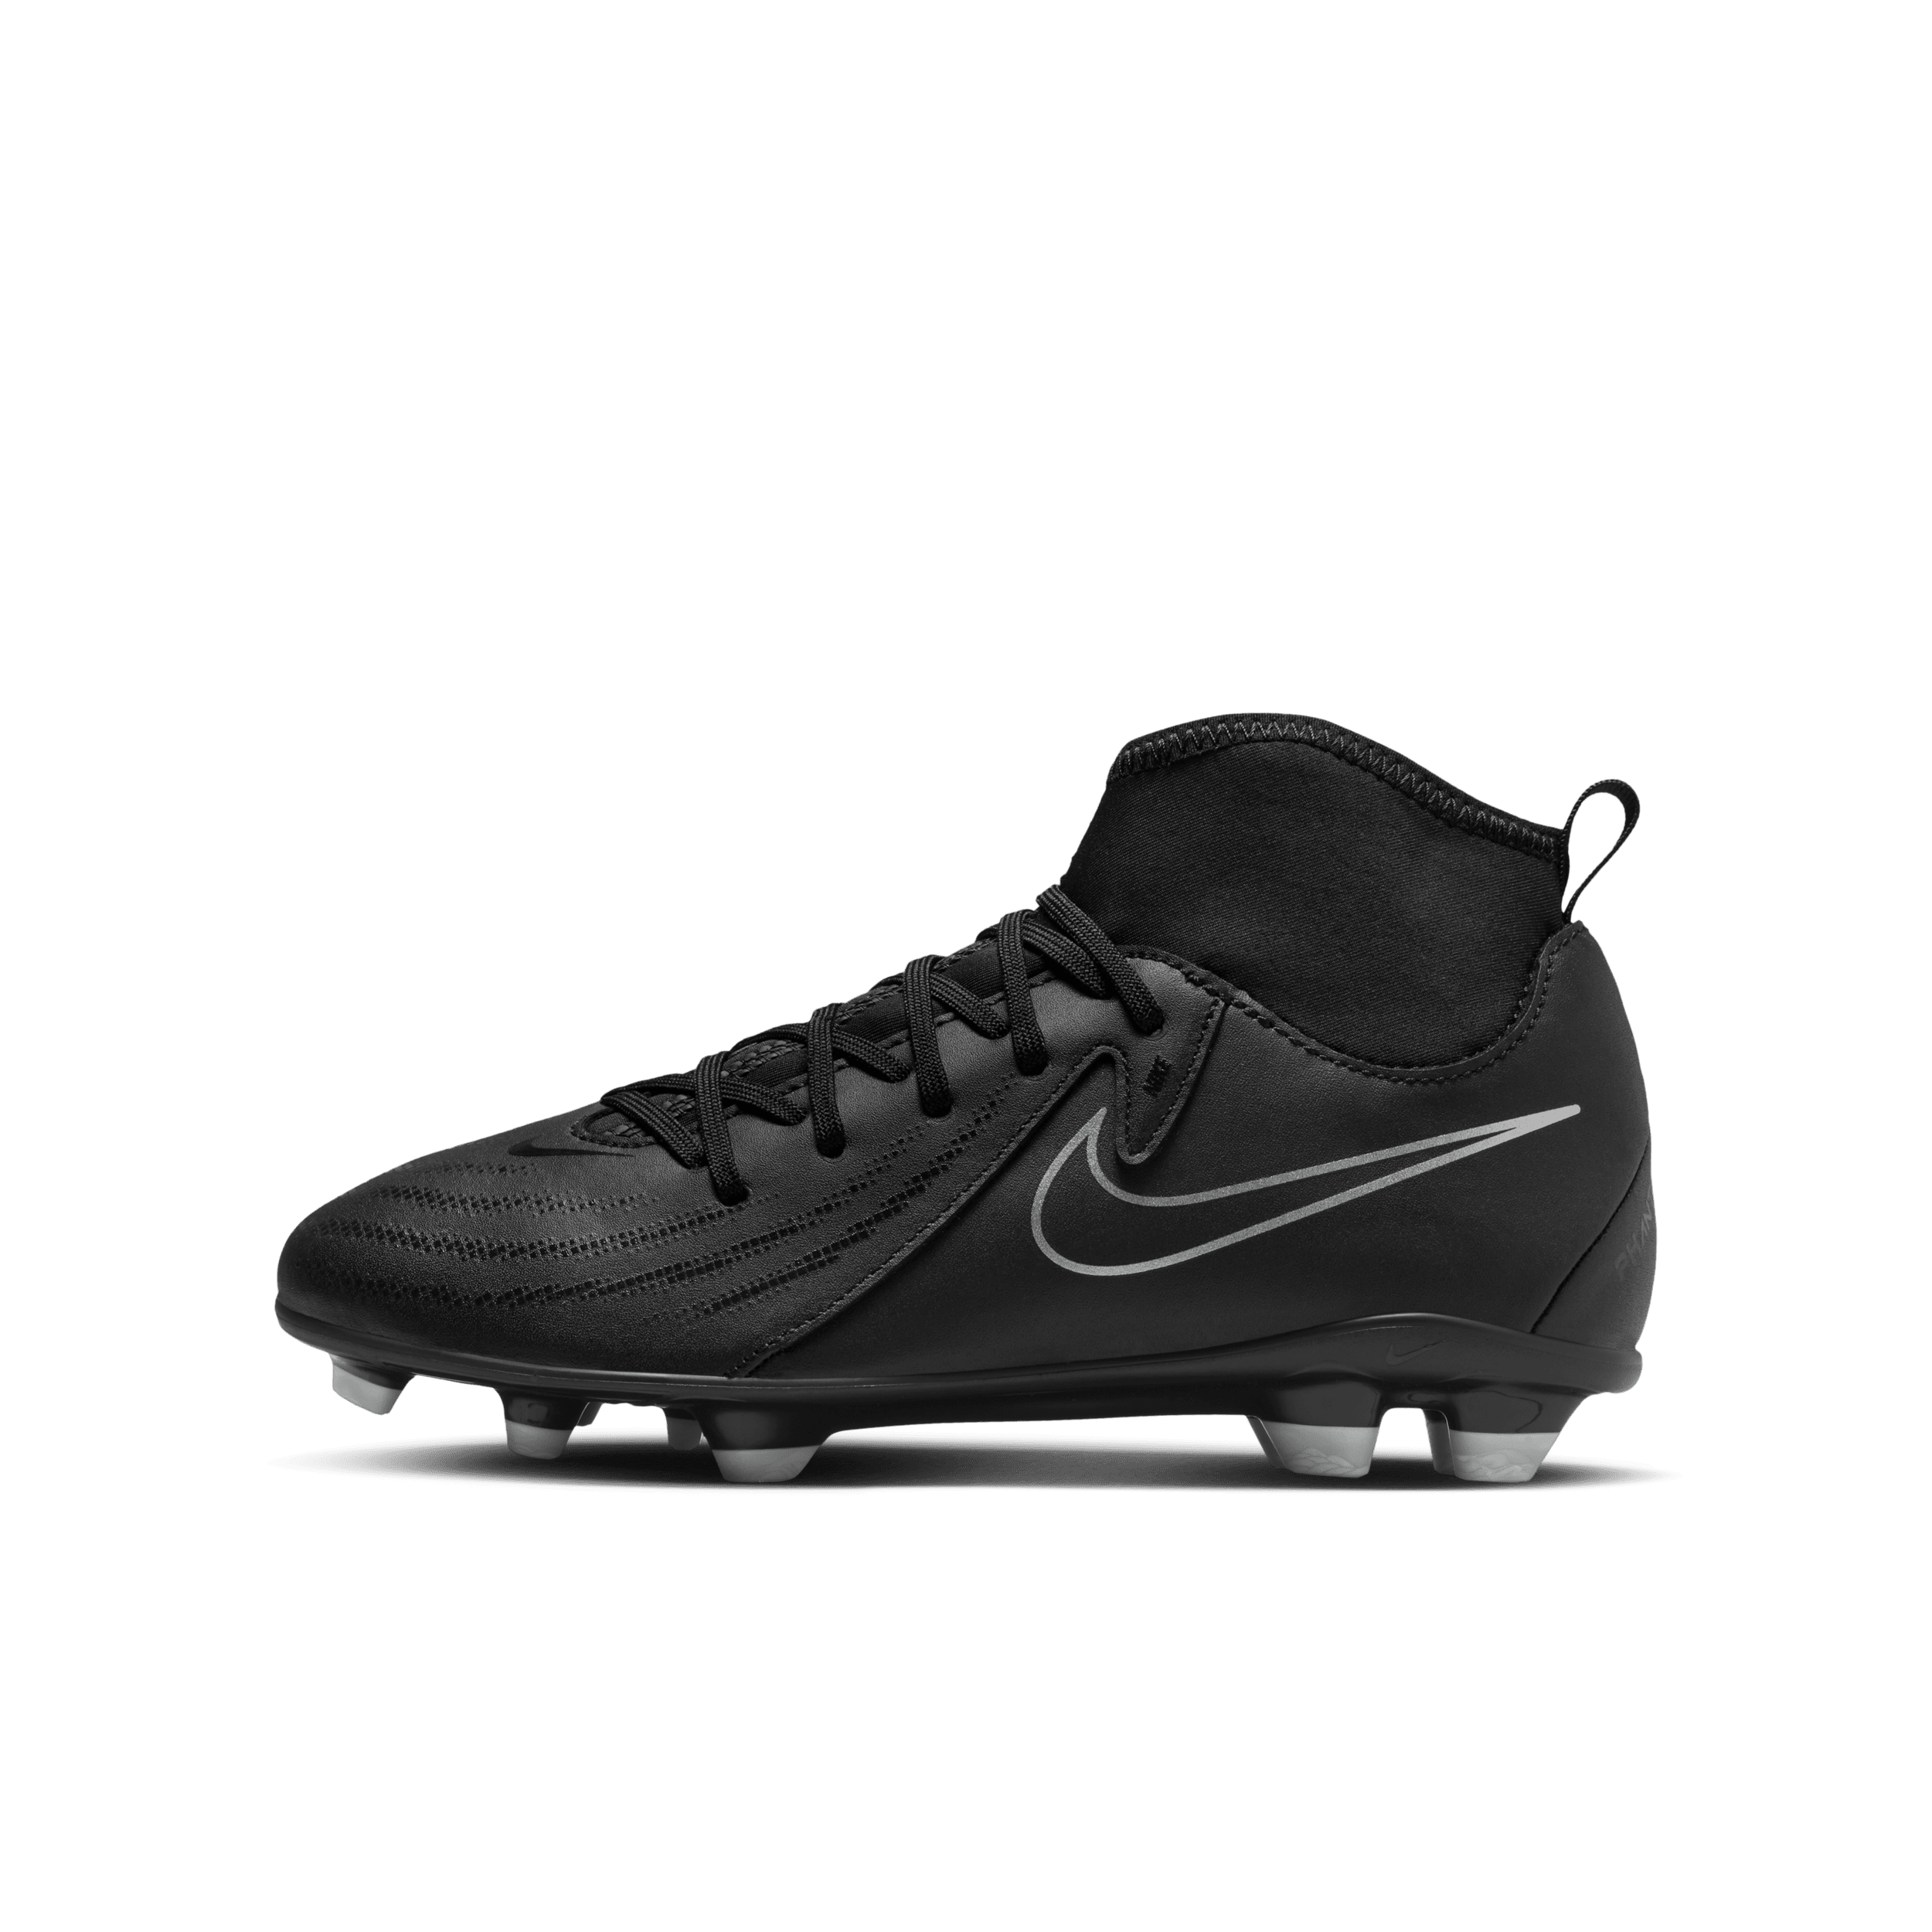 Scarpa da calcio a taglio alto MG Nike Jr. Phantom Luna 2 Club – Bambini/Ragazzi - Nero